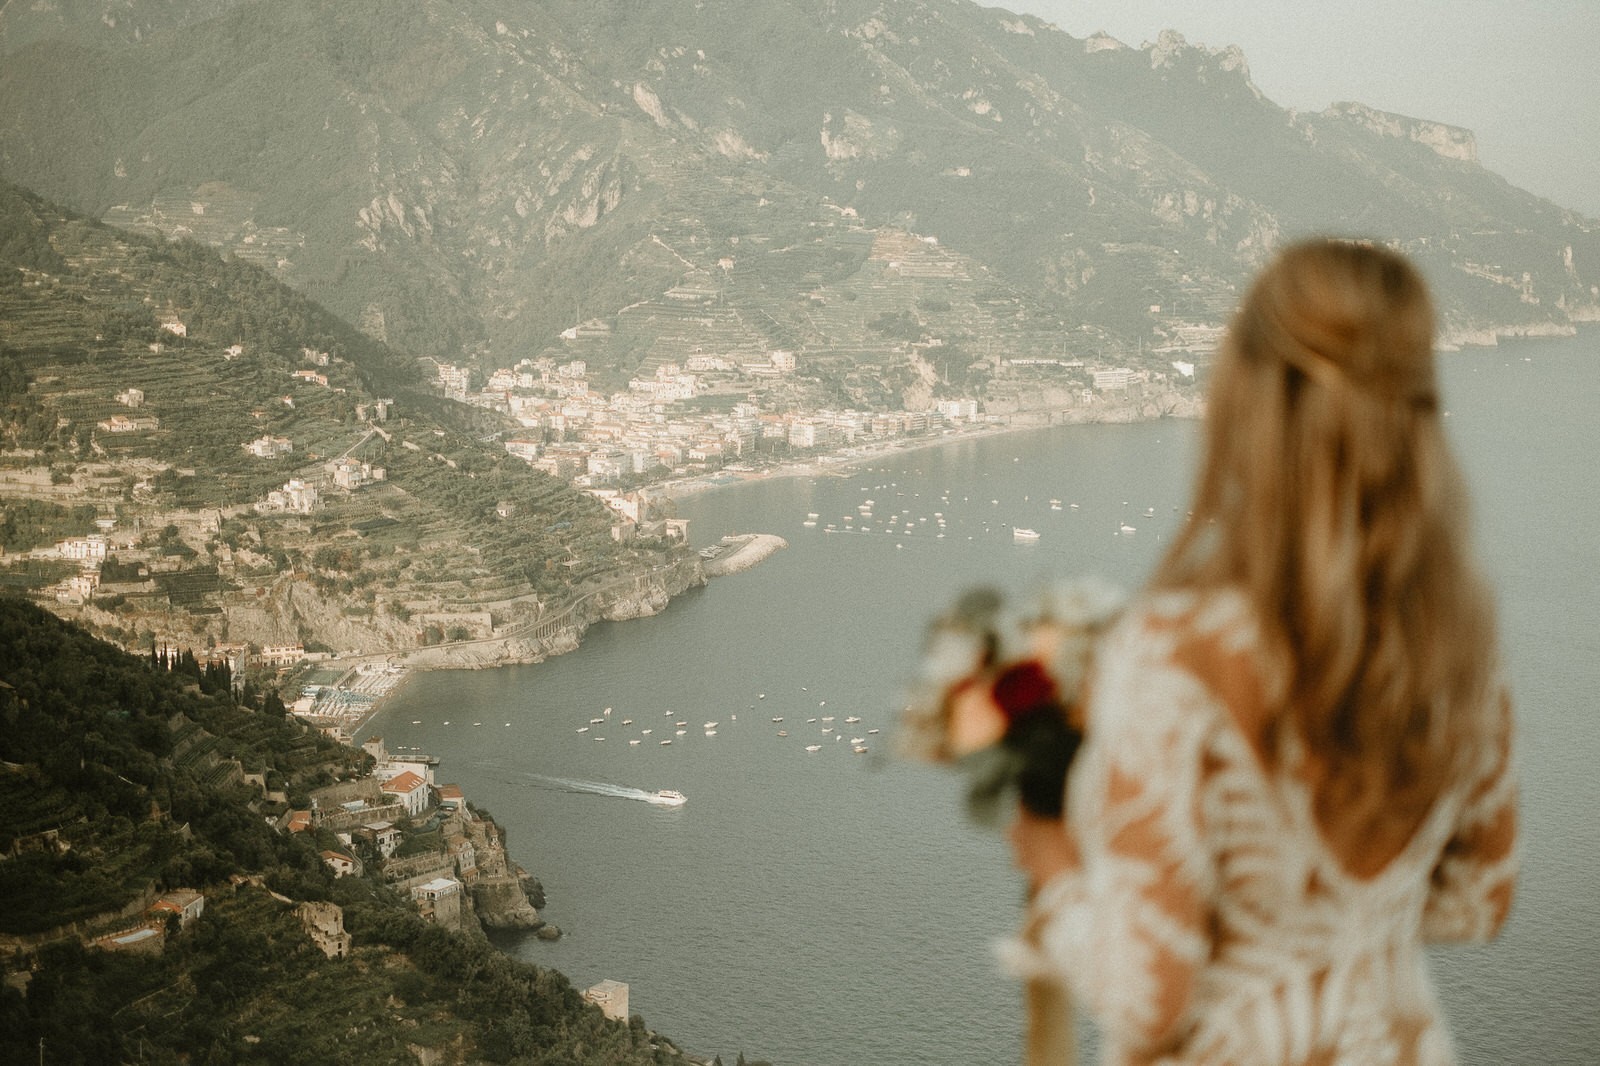 Portraits - Intimate Wedding Ravello, Amalfi Coast